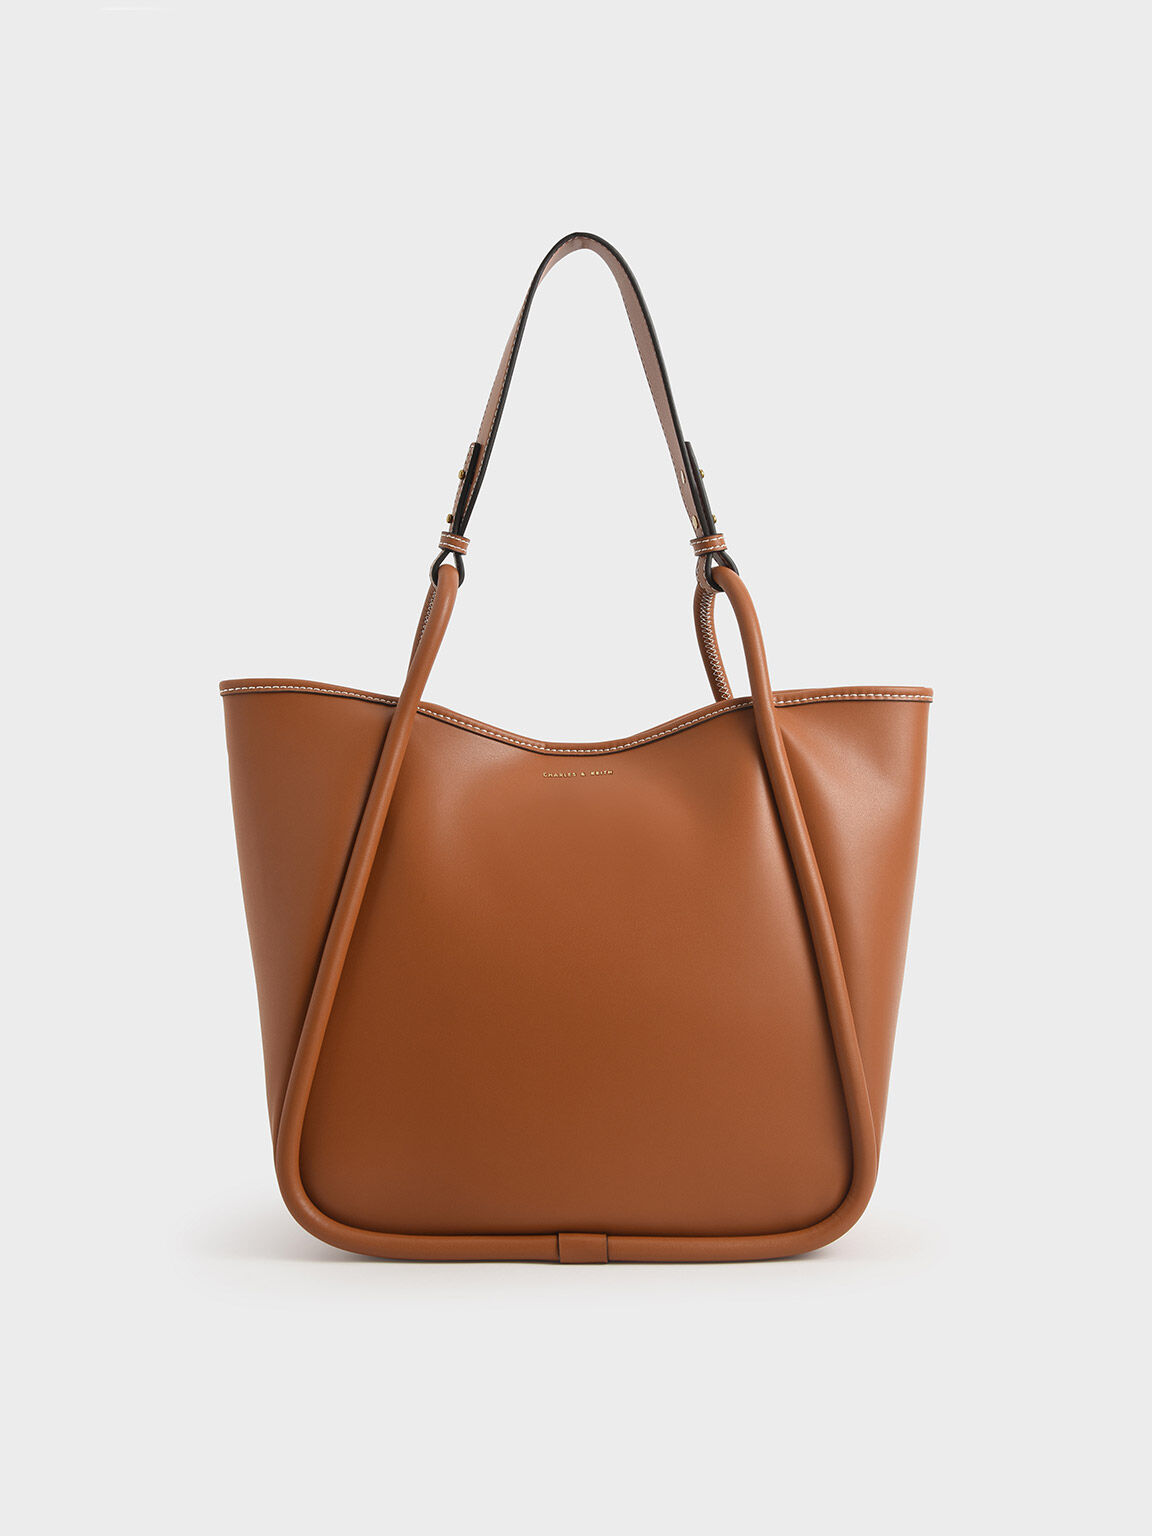 GÖRSNYGG shopping bag, large, light beige, 22 ½x14 ½x15 ¼